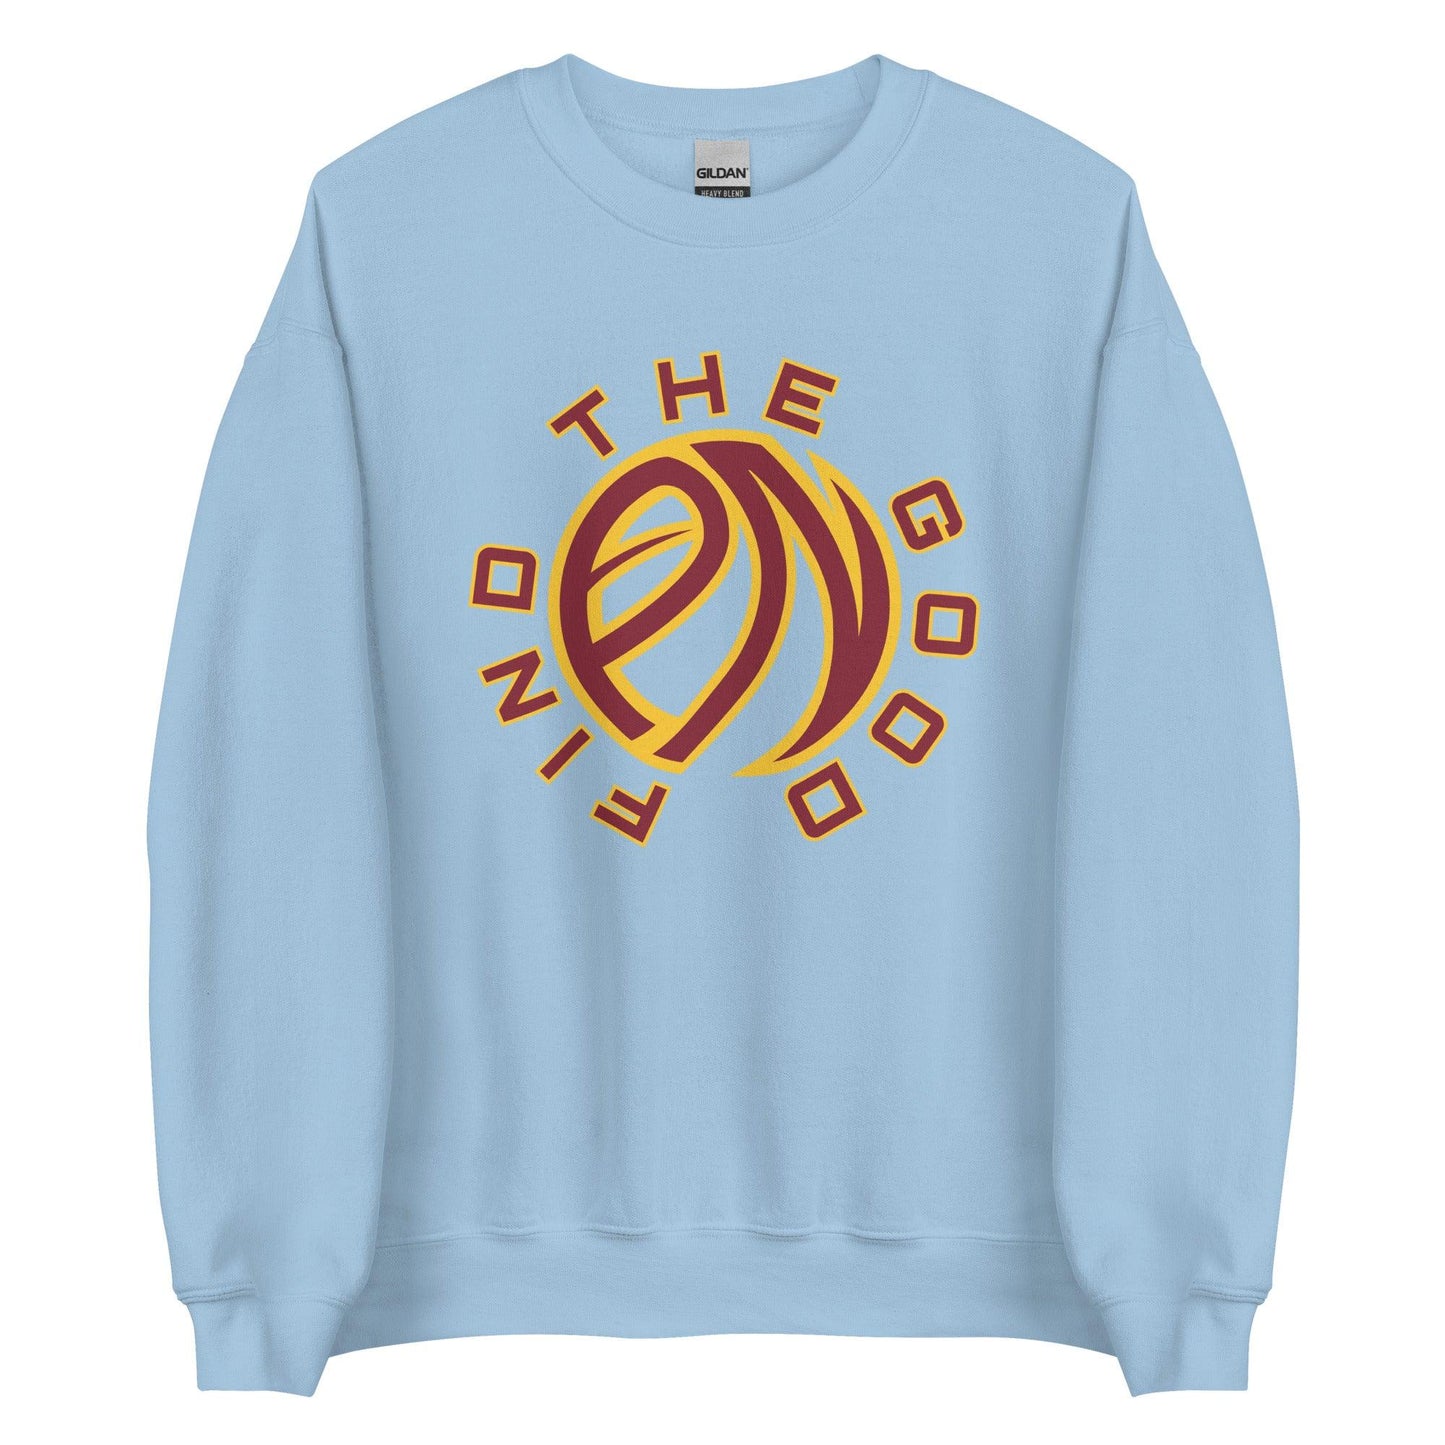 Prentiss Nixon “Find The Good” Sweatshirt - Fan Arch